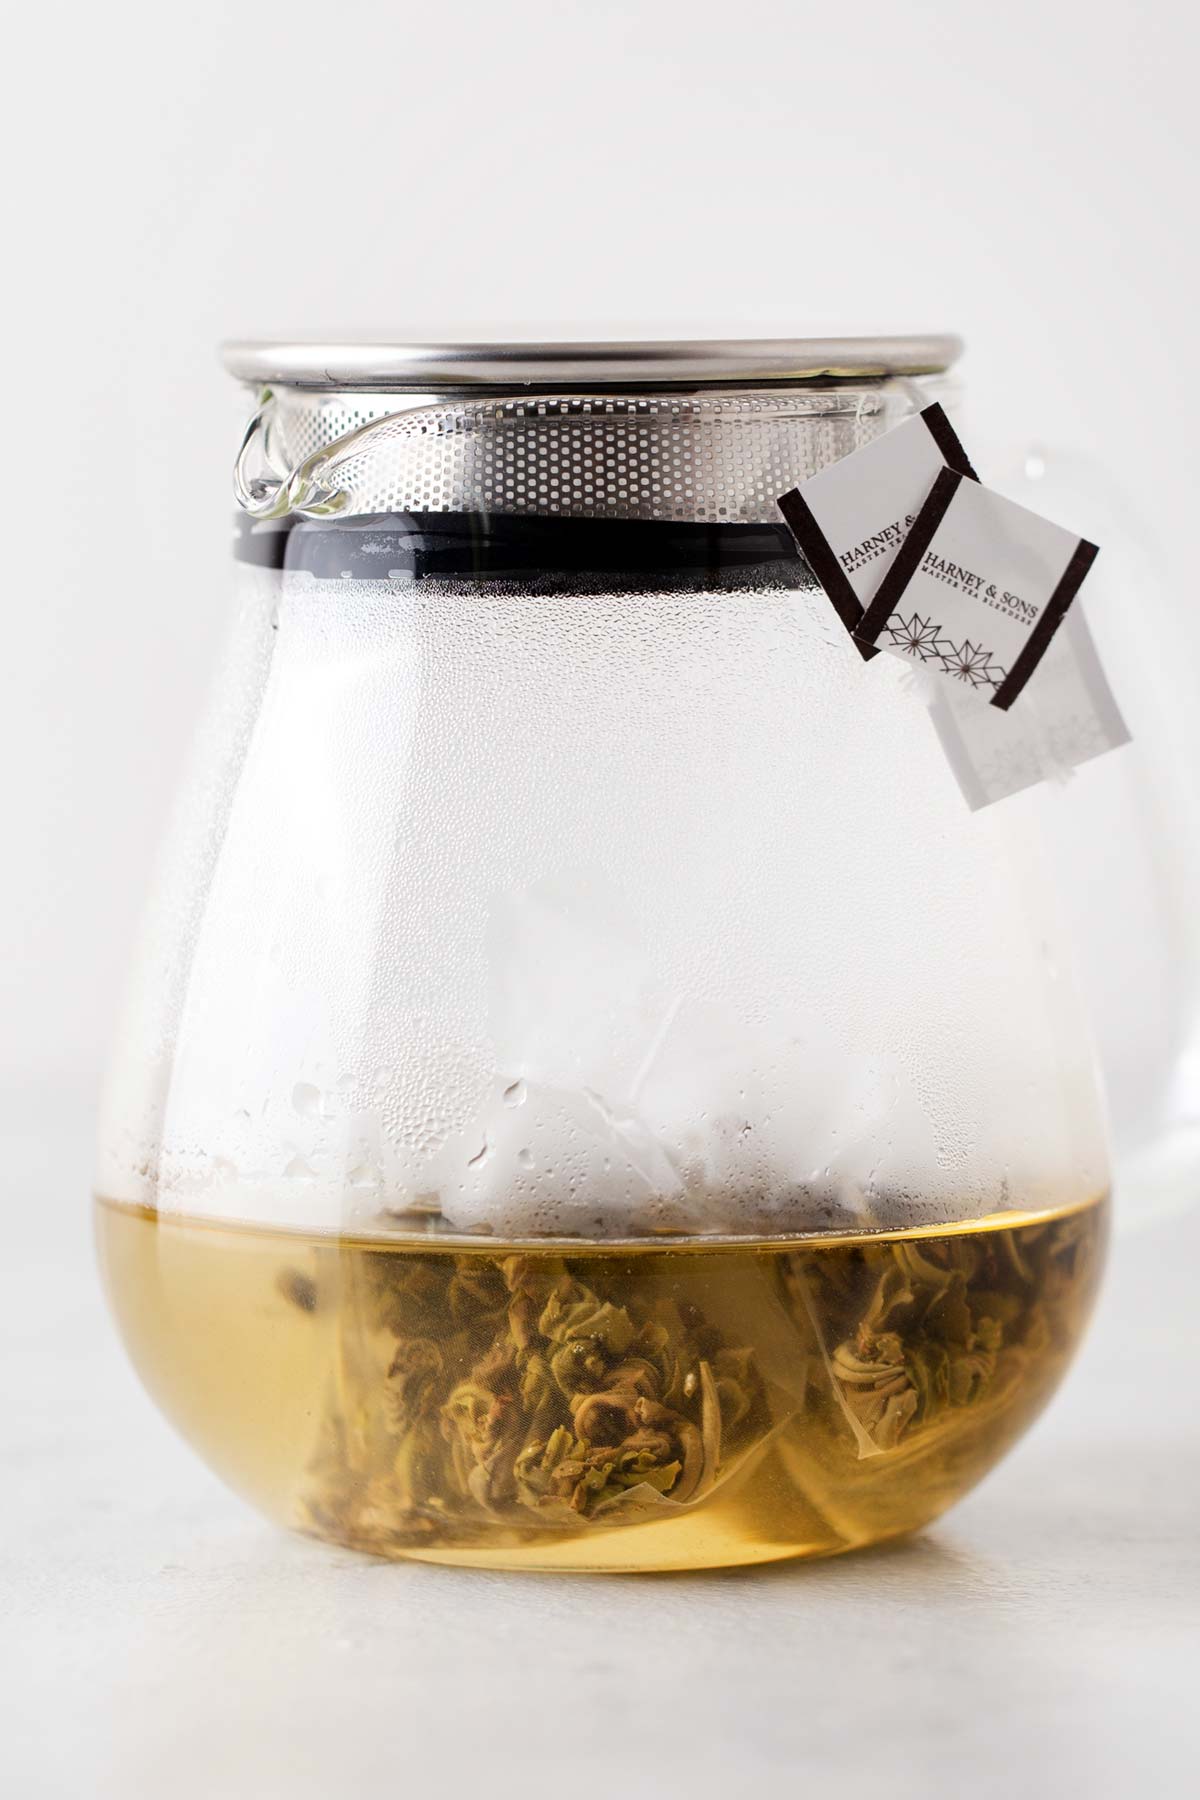 Jasmine tea sachets brewing in water in a teapot.